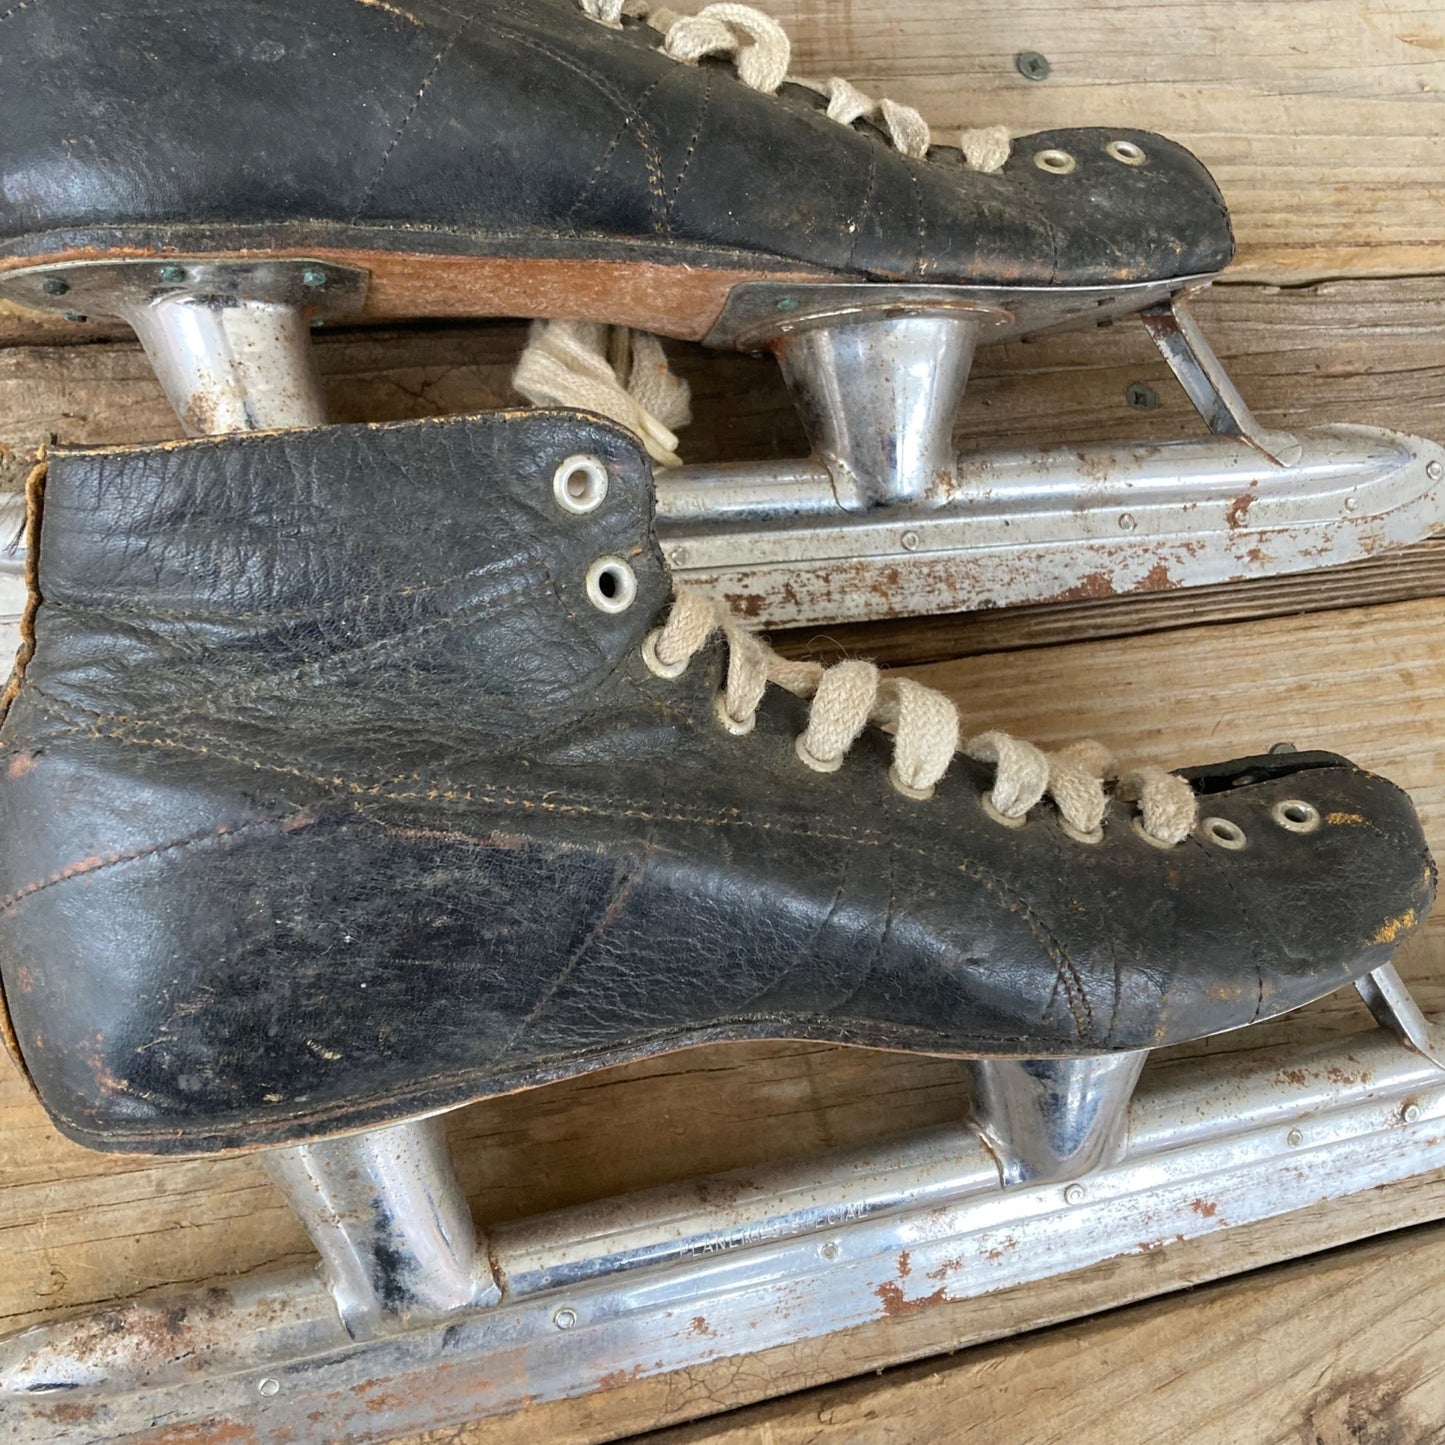 Vintage Planert Hand-Made Olympic Leather Speed Skates